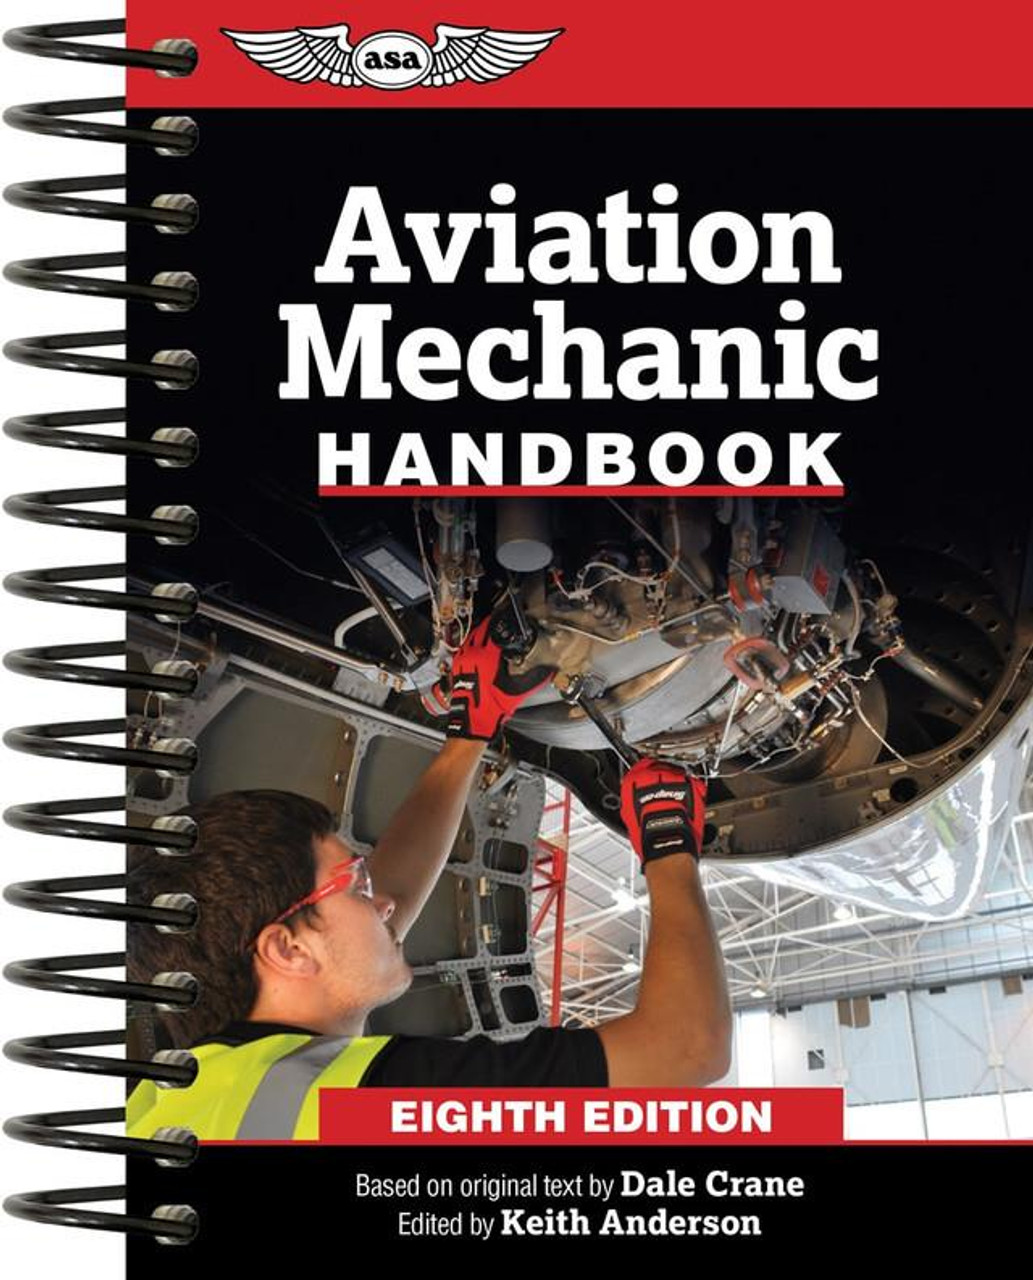 ASA Aviation Mechanic Handbook-ASA-MHB-8 
ASA-MHB-8
ISBN: 9781644252277
SkySupplyUSA.com